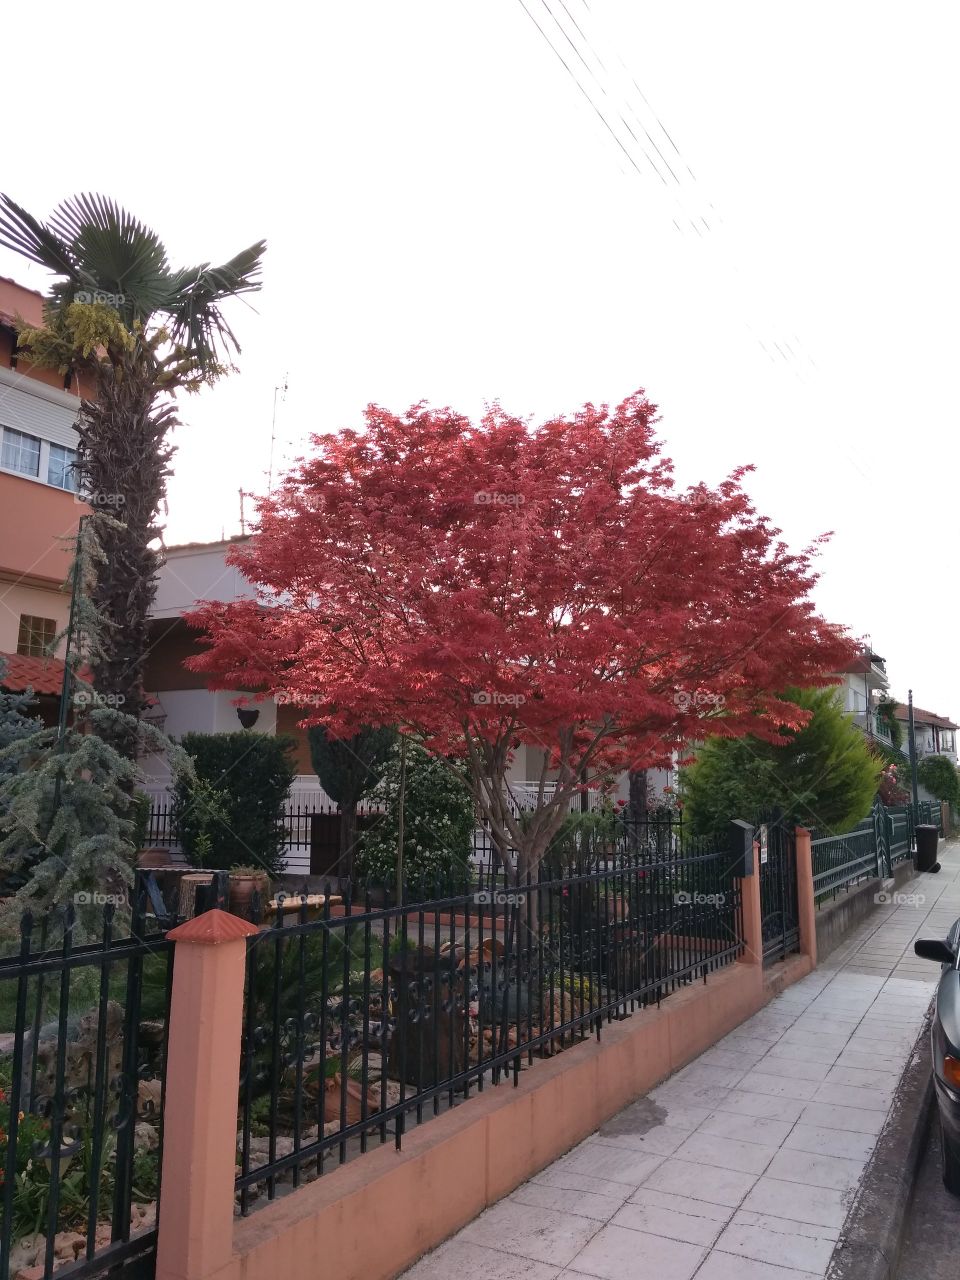 Beautiful 🌲 with reddish leaves